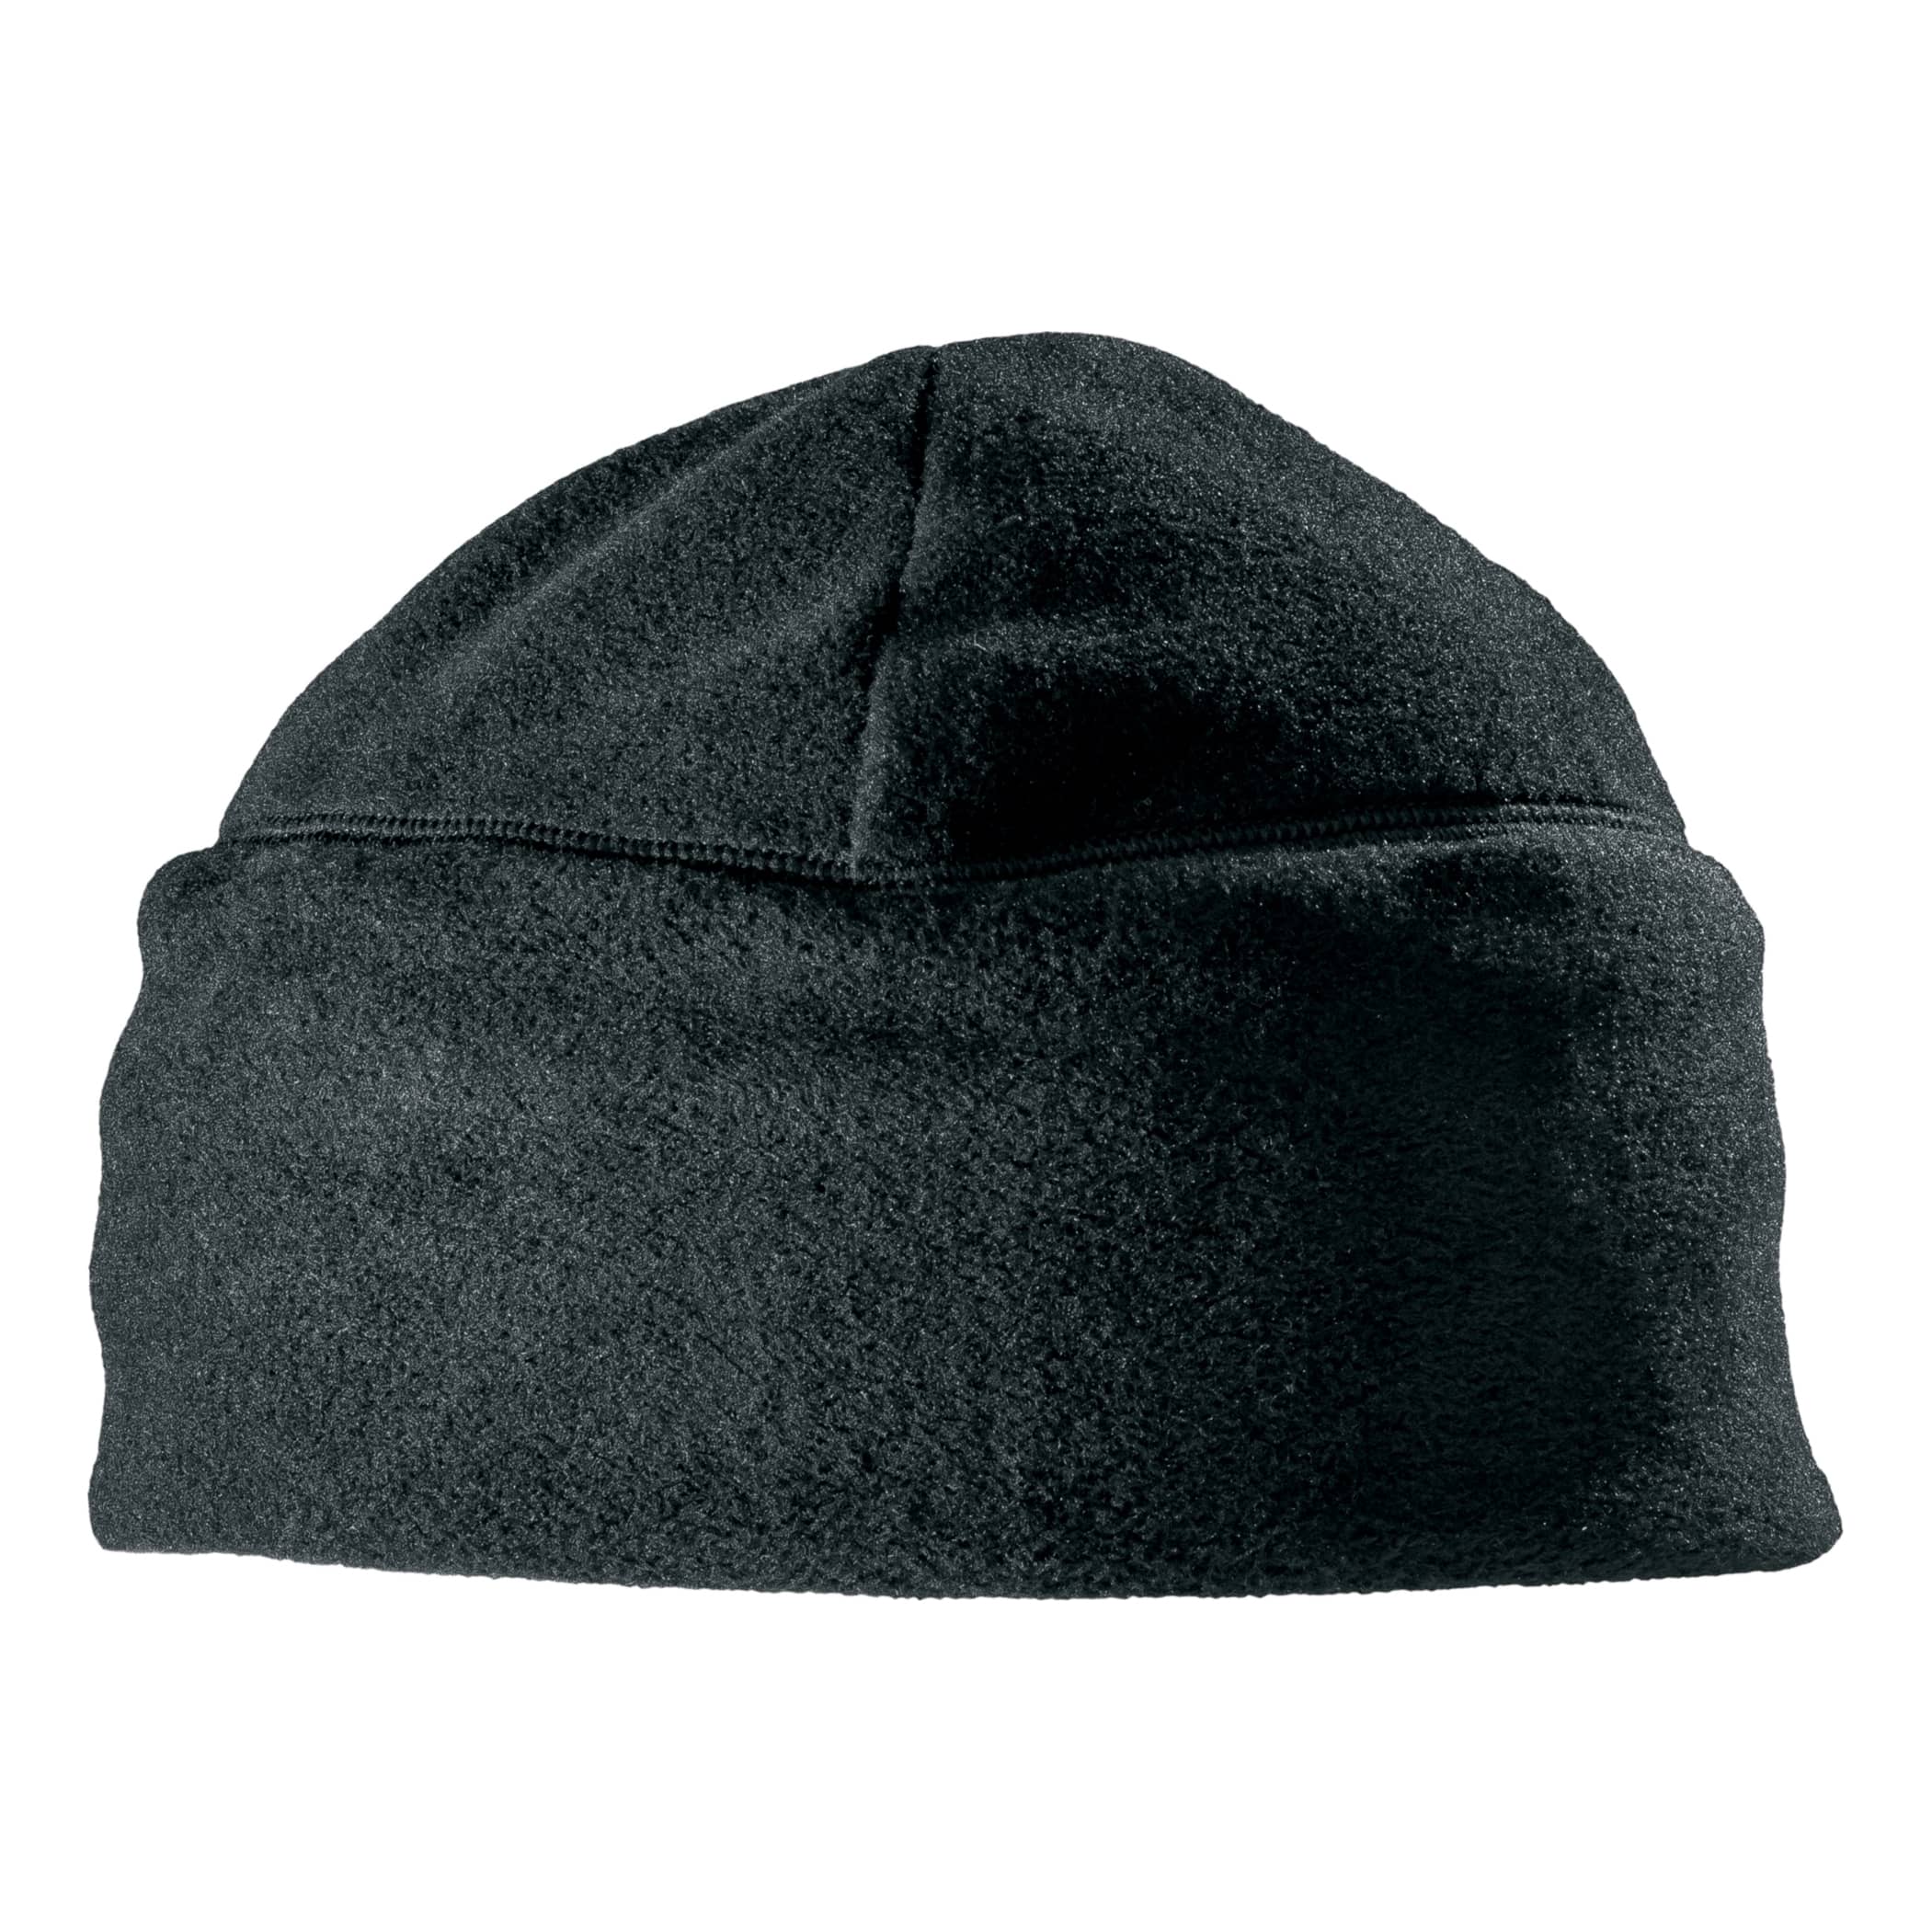 Cabelas Gray 60% Wool Cap Hat Baseball Style. EUC